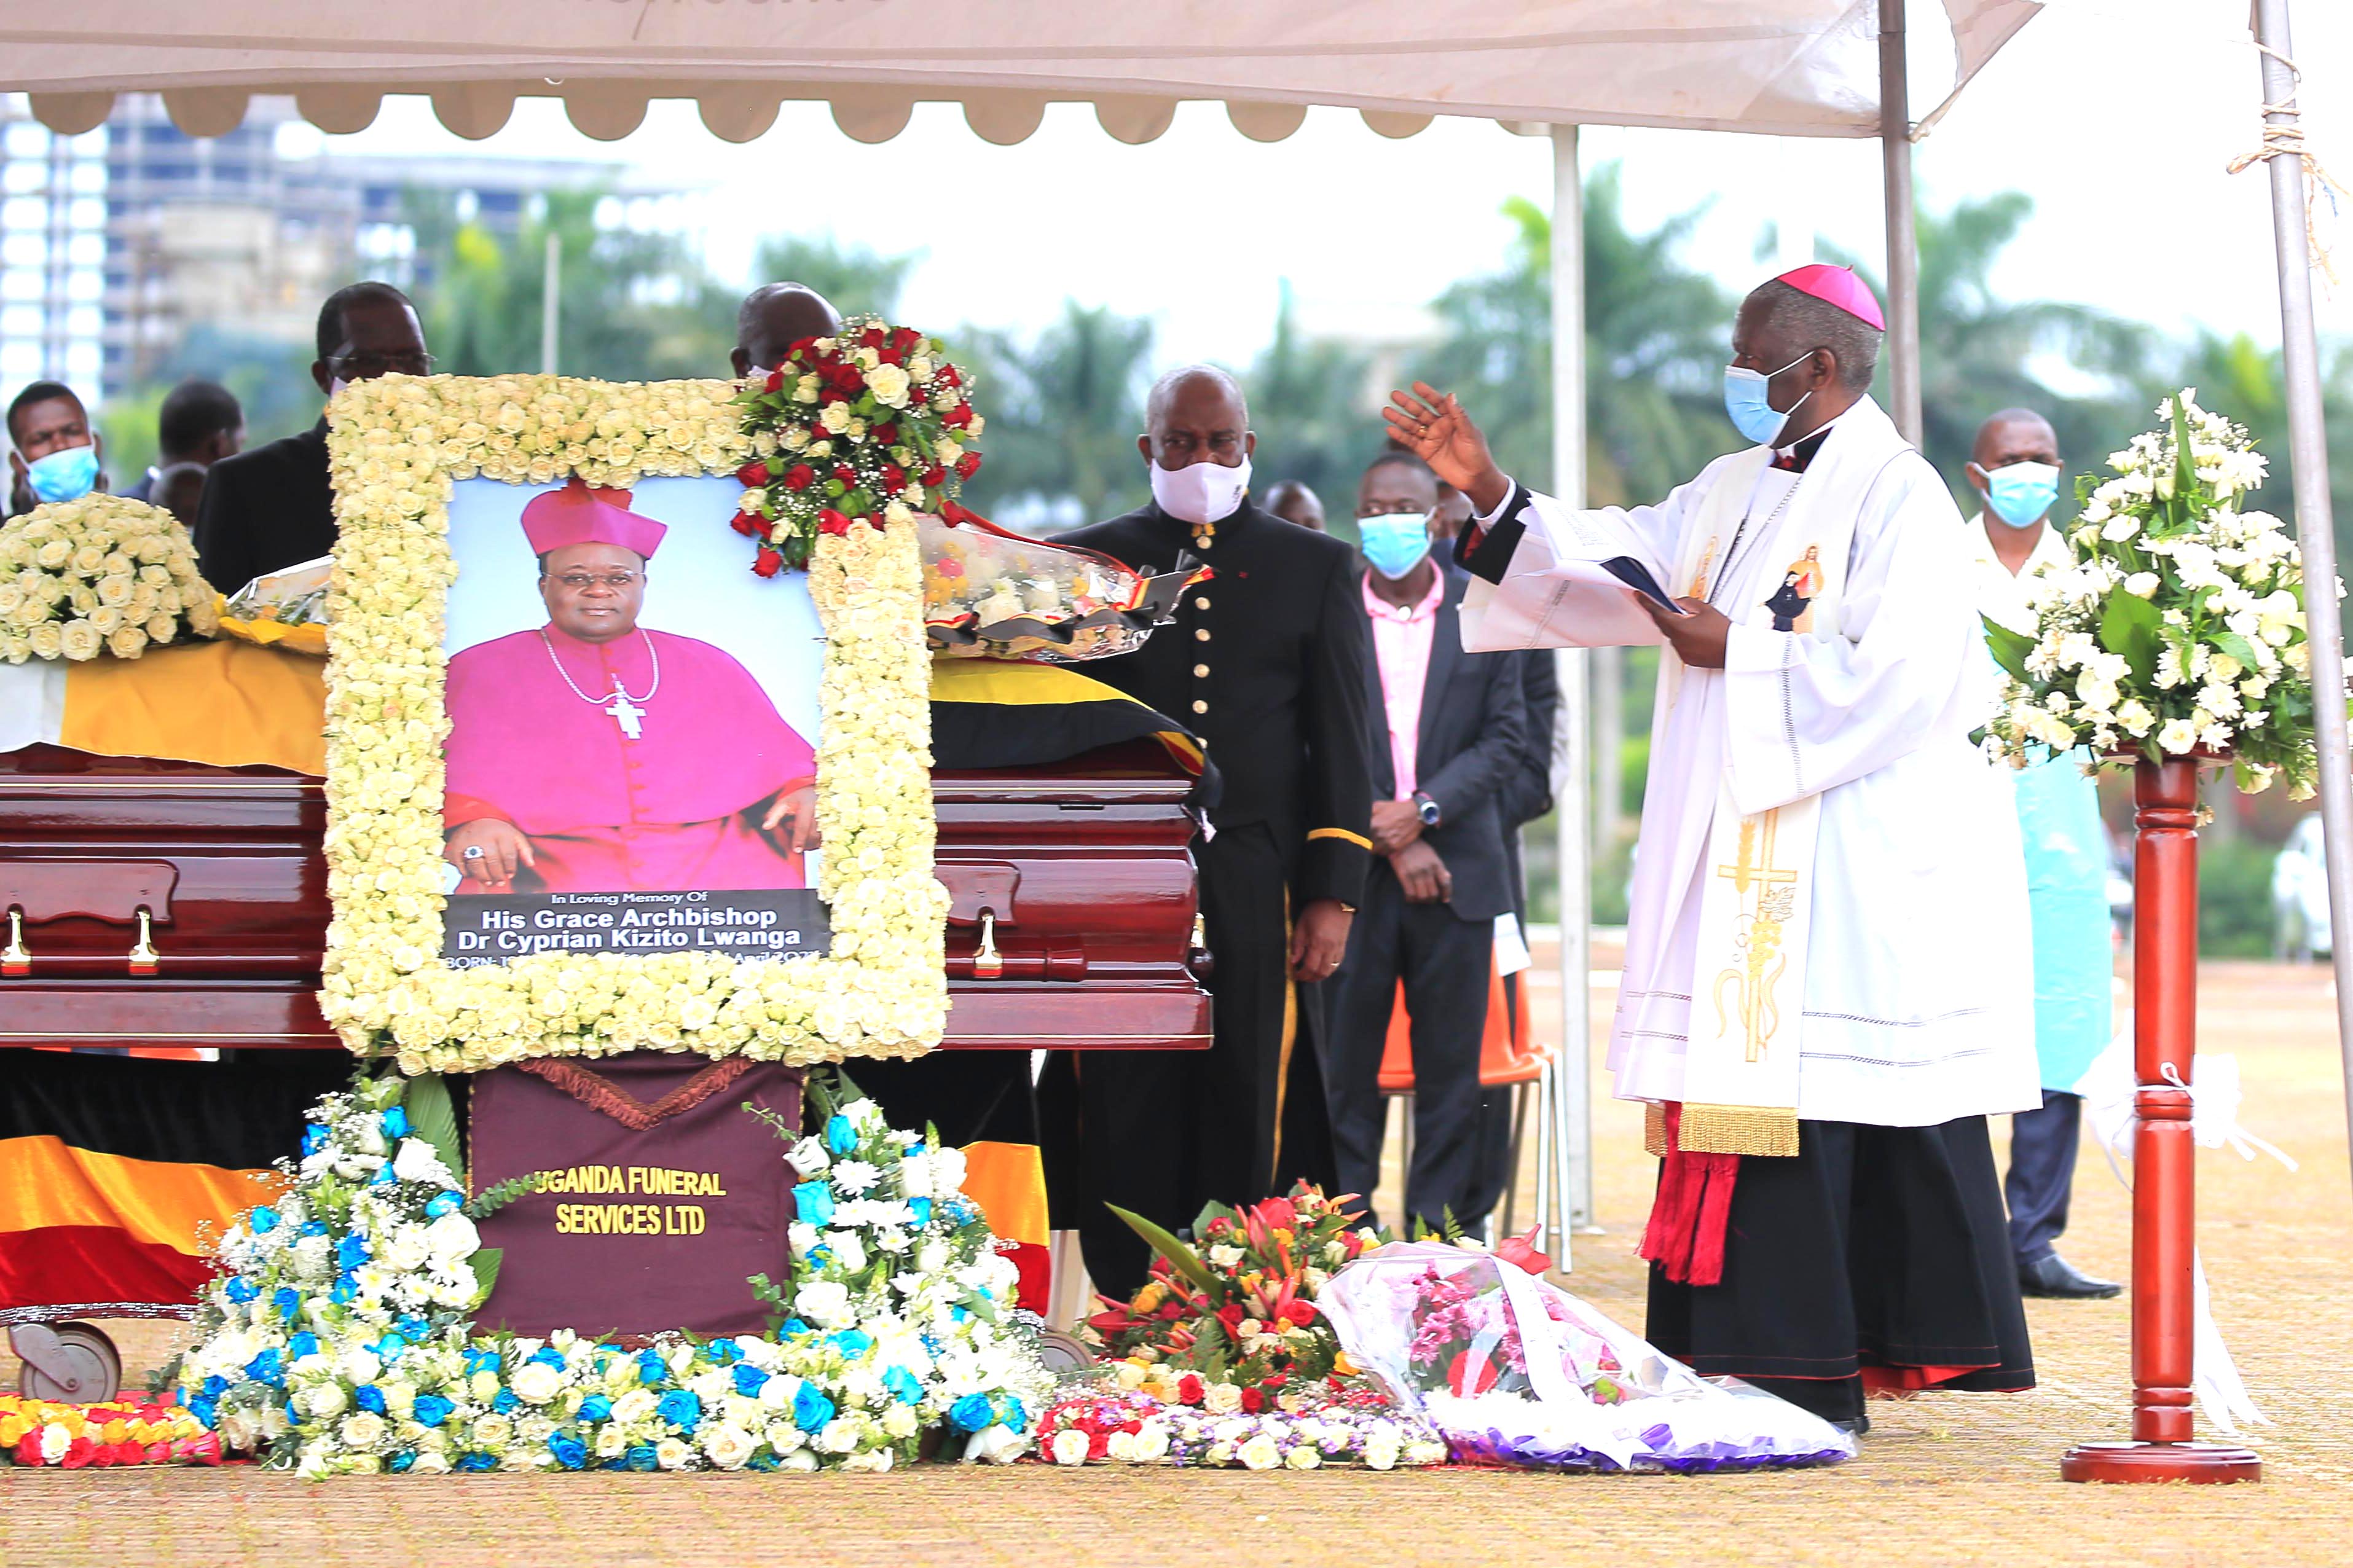 Uganda Funeral Services